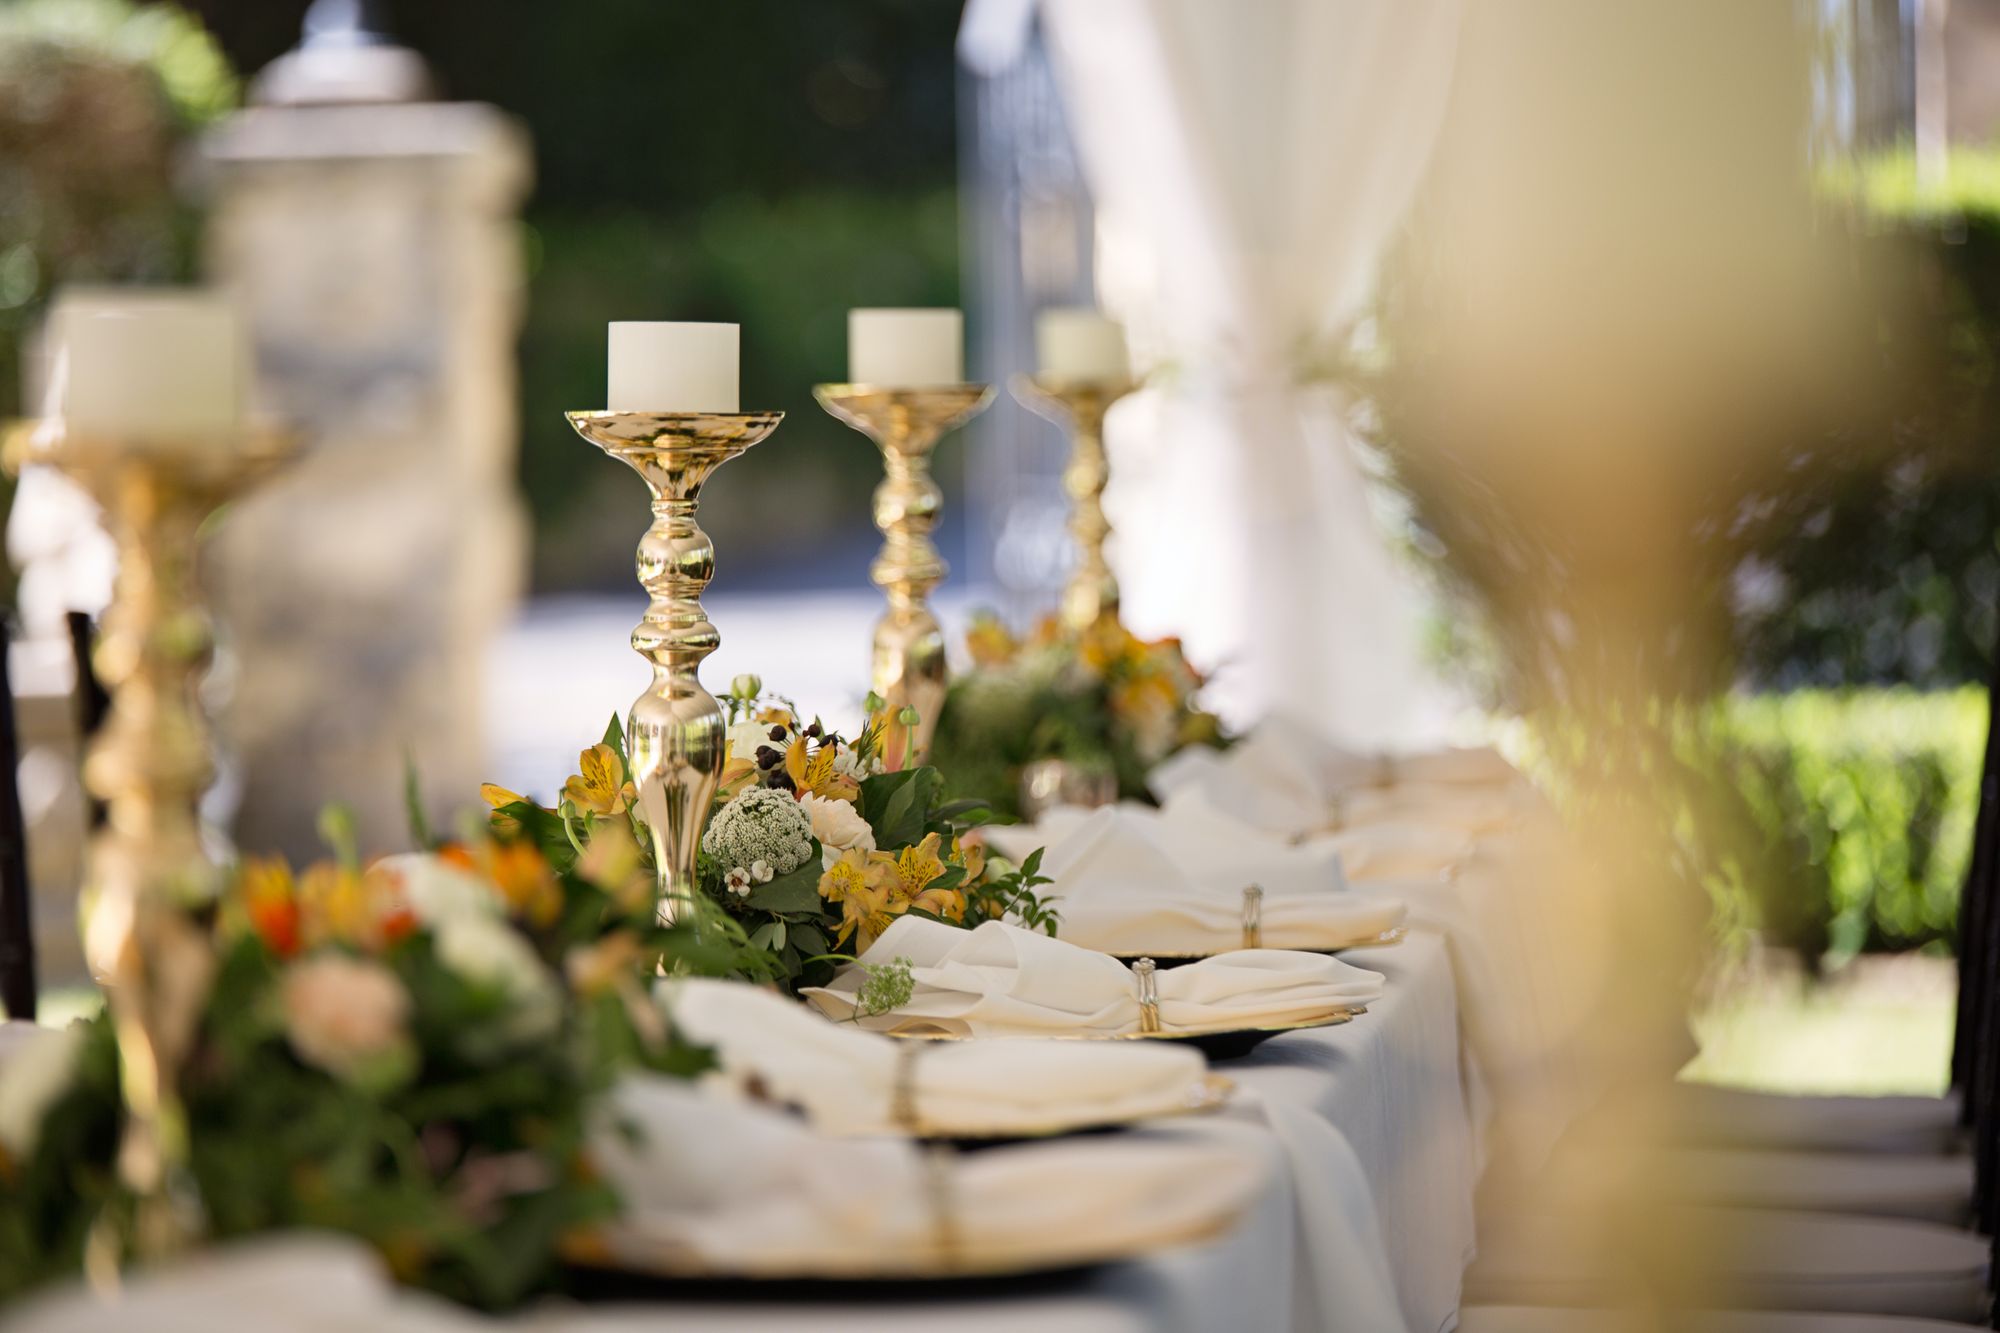 Table spread at a wedding